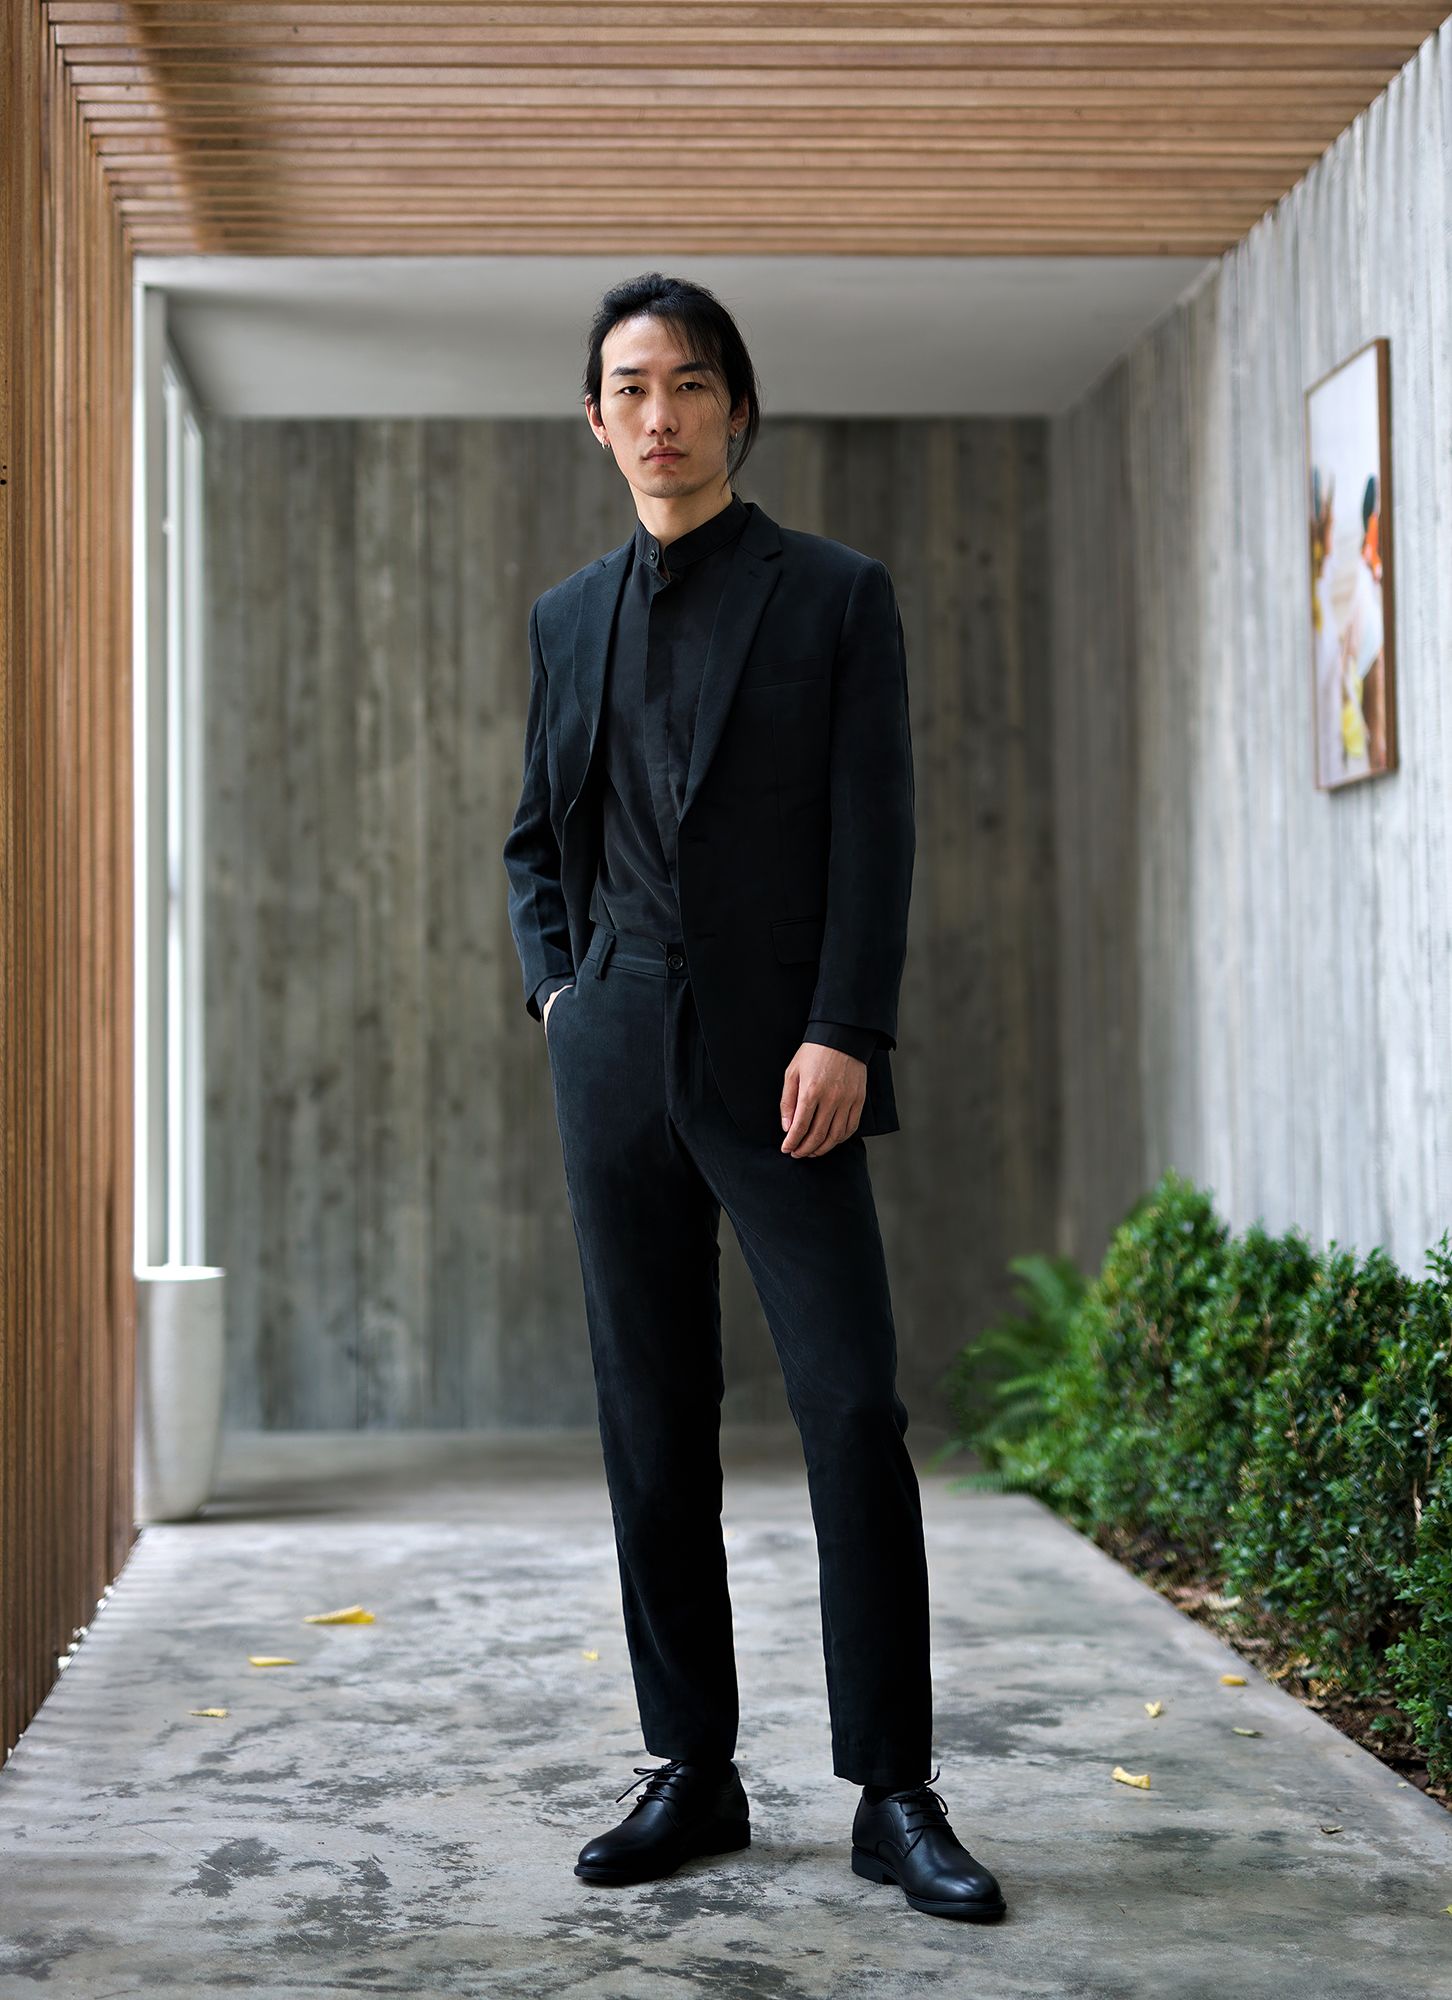 ROSEN-S Professional Suit - Dark Grey Silk Linen